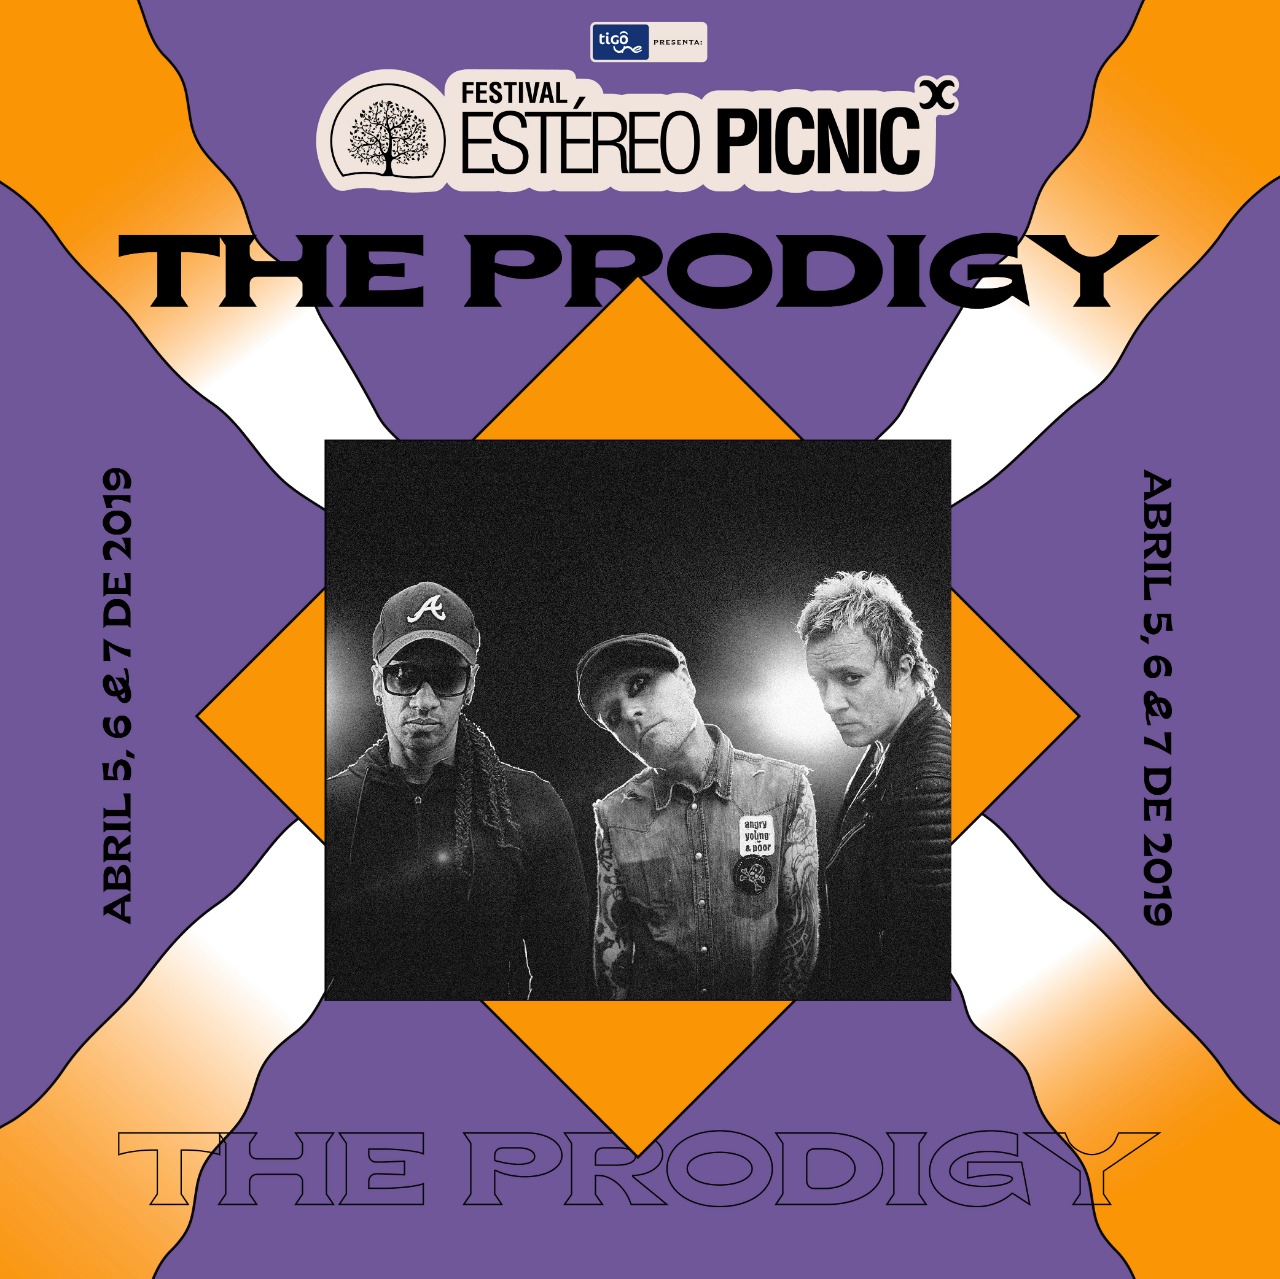 The Prodigy en el Festival Estéreo Picnic 2019.